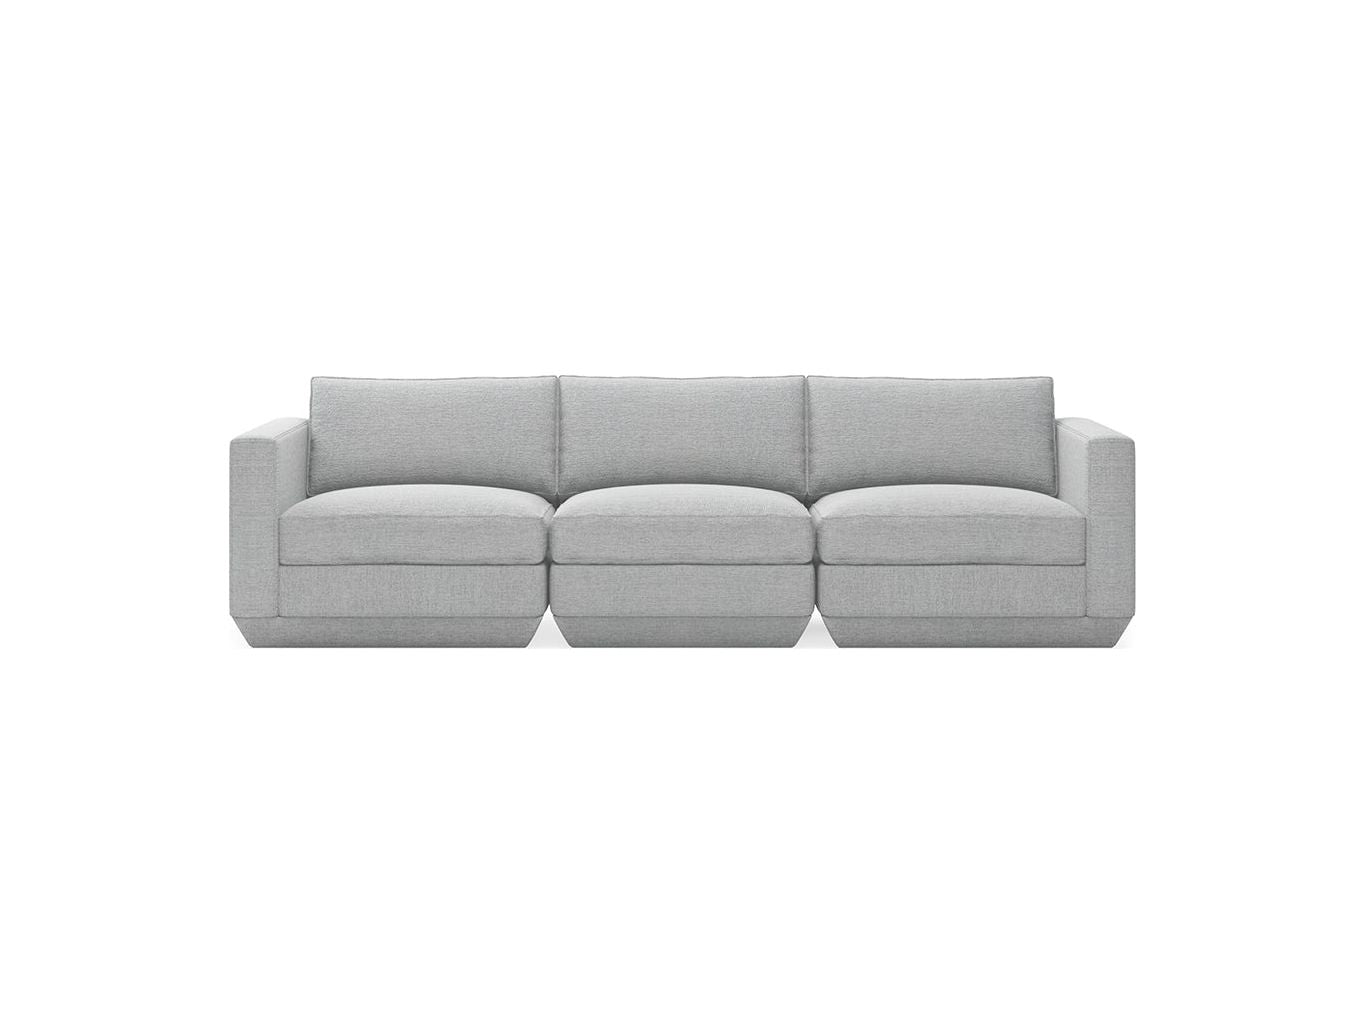 Podium 3PC Sofa by Gus* Modern